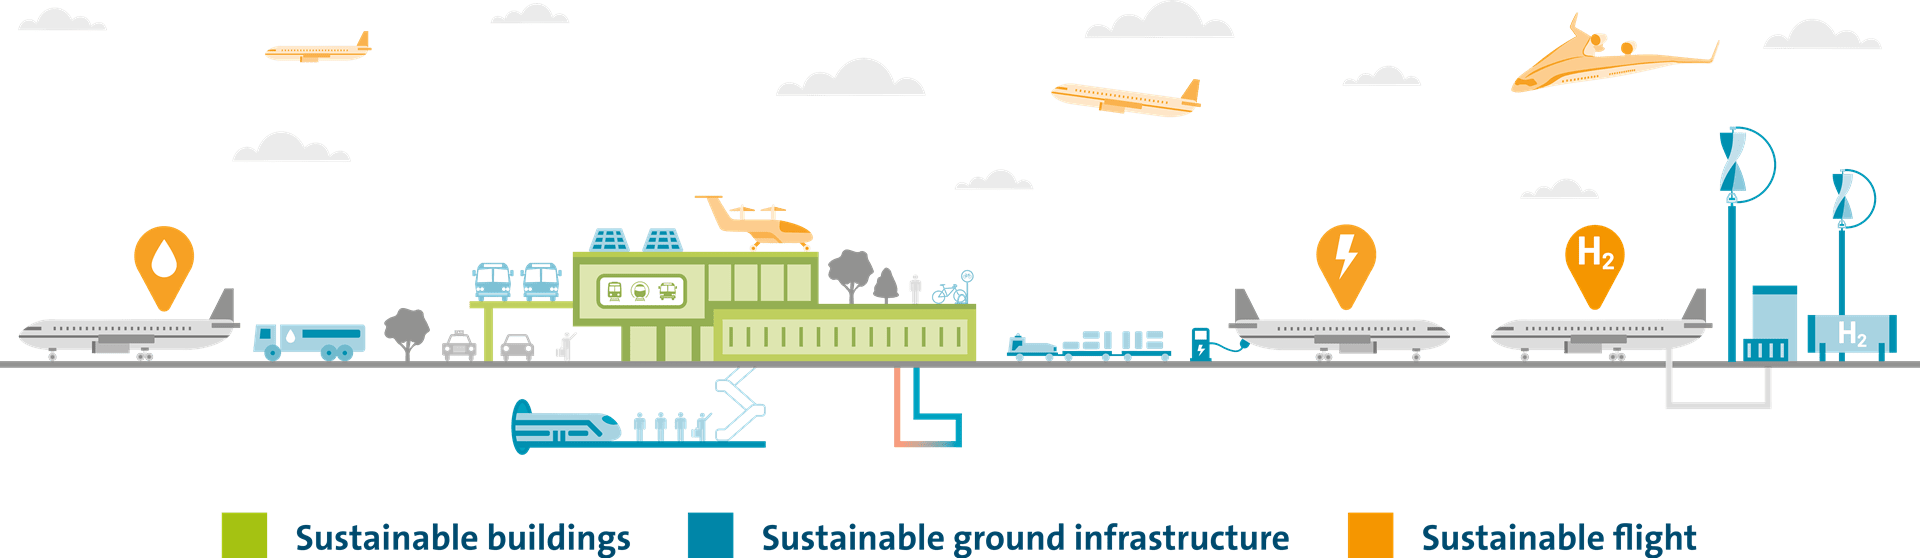 elements of sustainable aviation